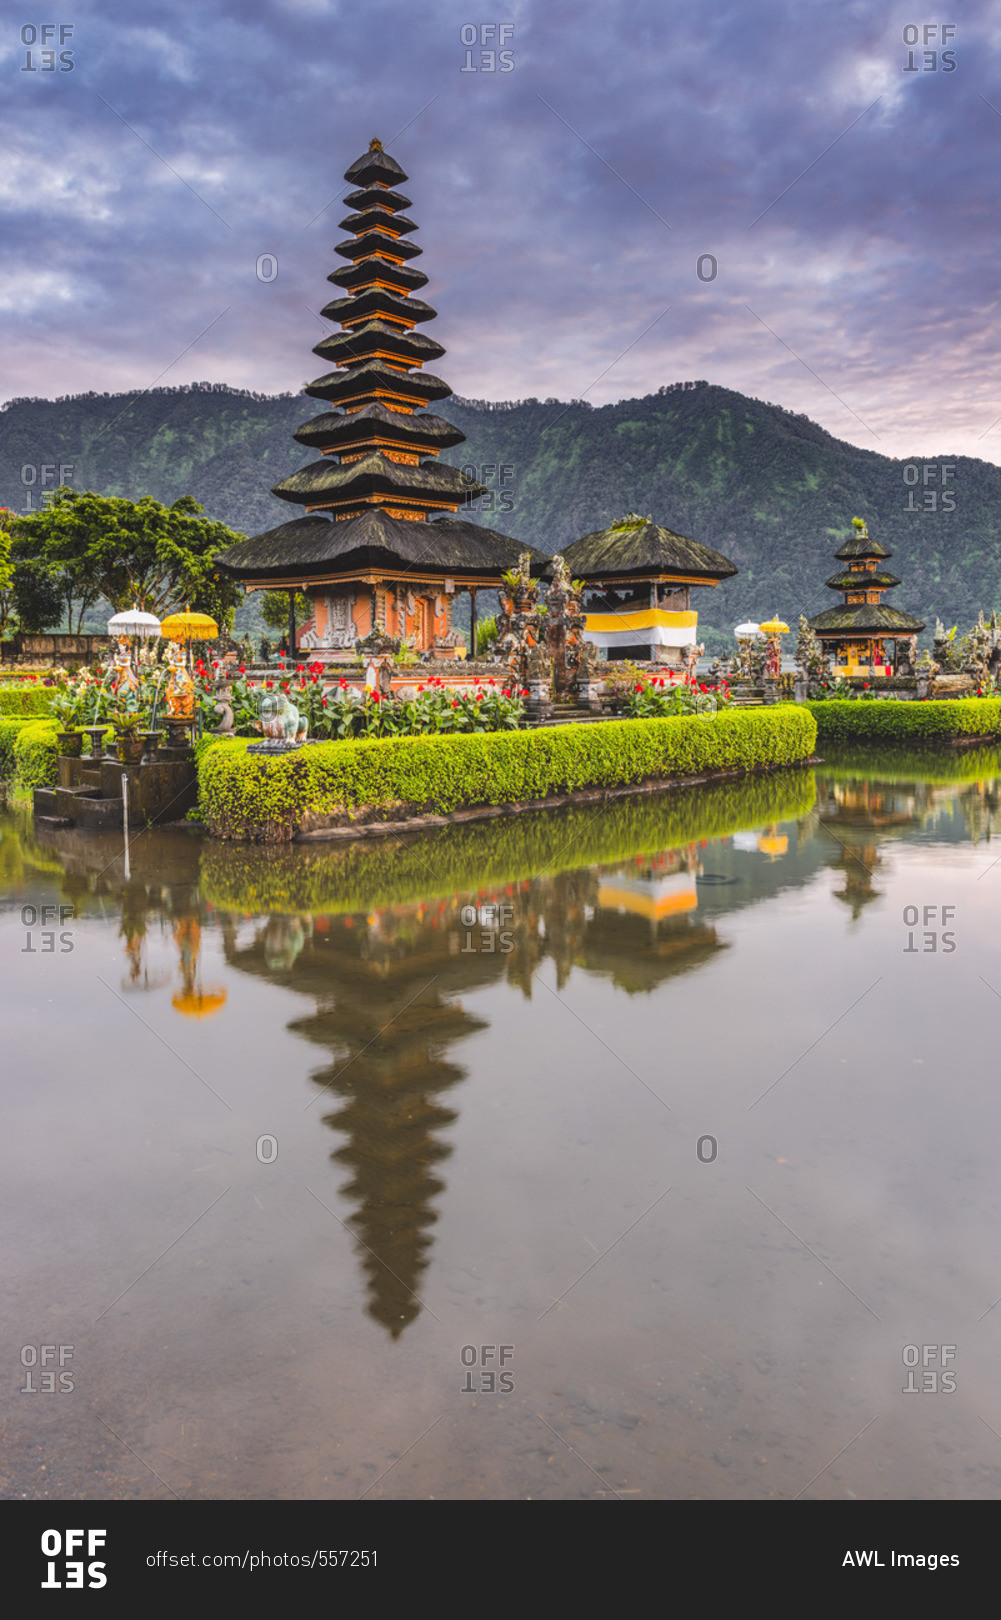 Bali, Indonesia, South East Asia. Pura Ulun Danu Bratan water temple at the edge of Lake Bratan.